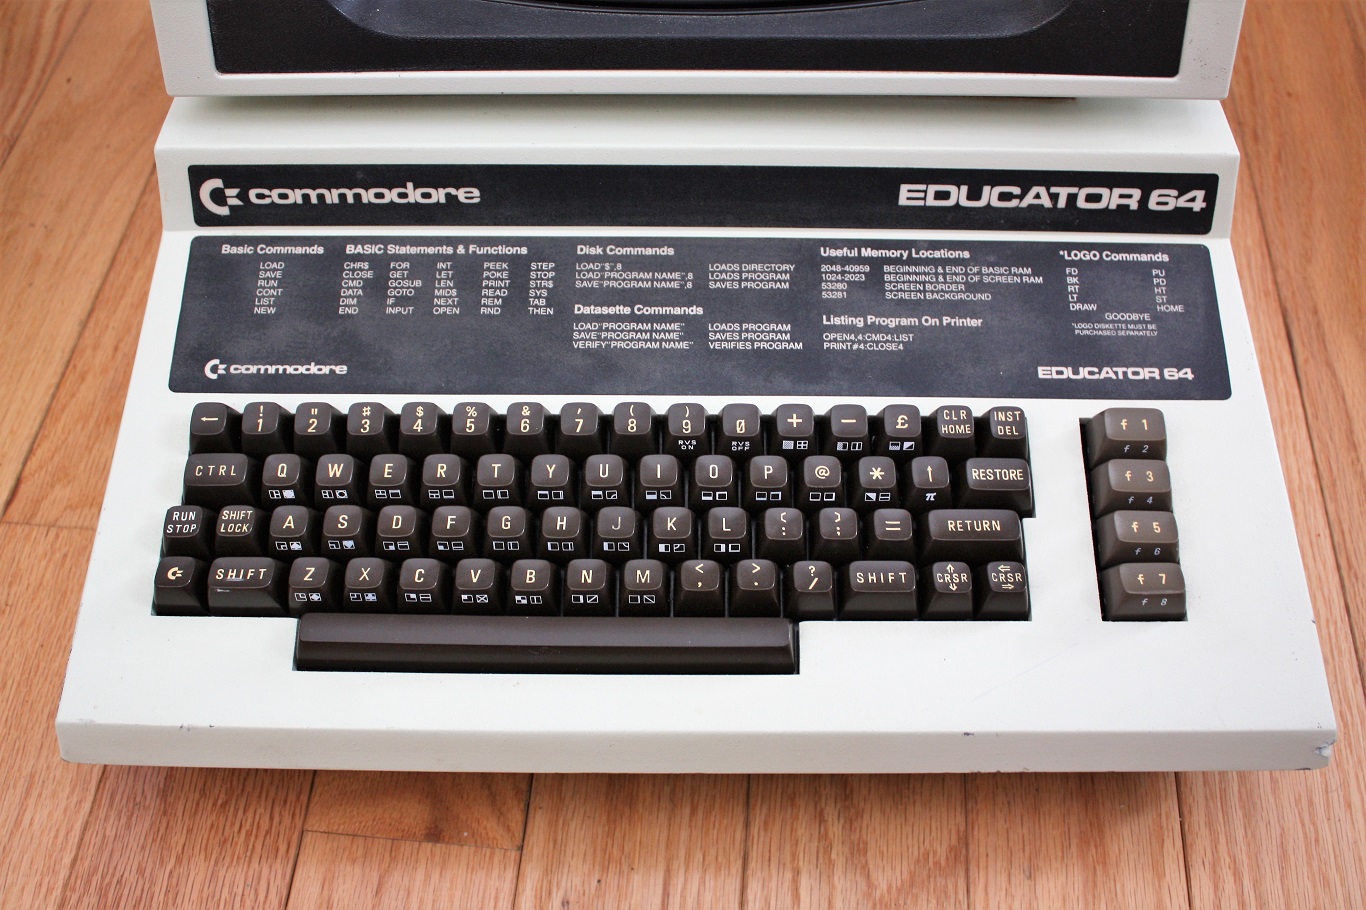 Educator 64 - with keyboard displayed